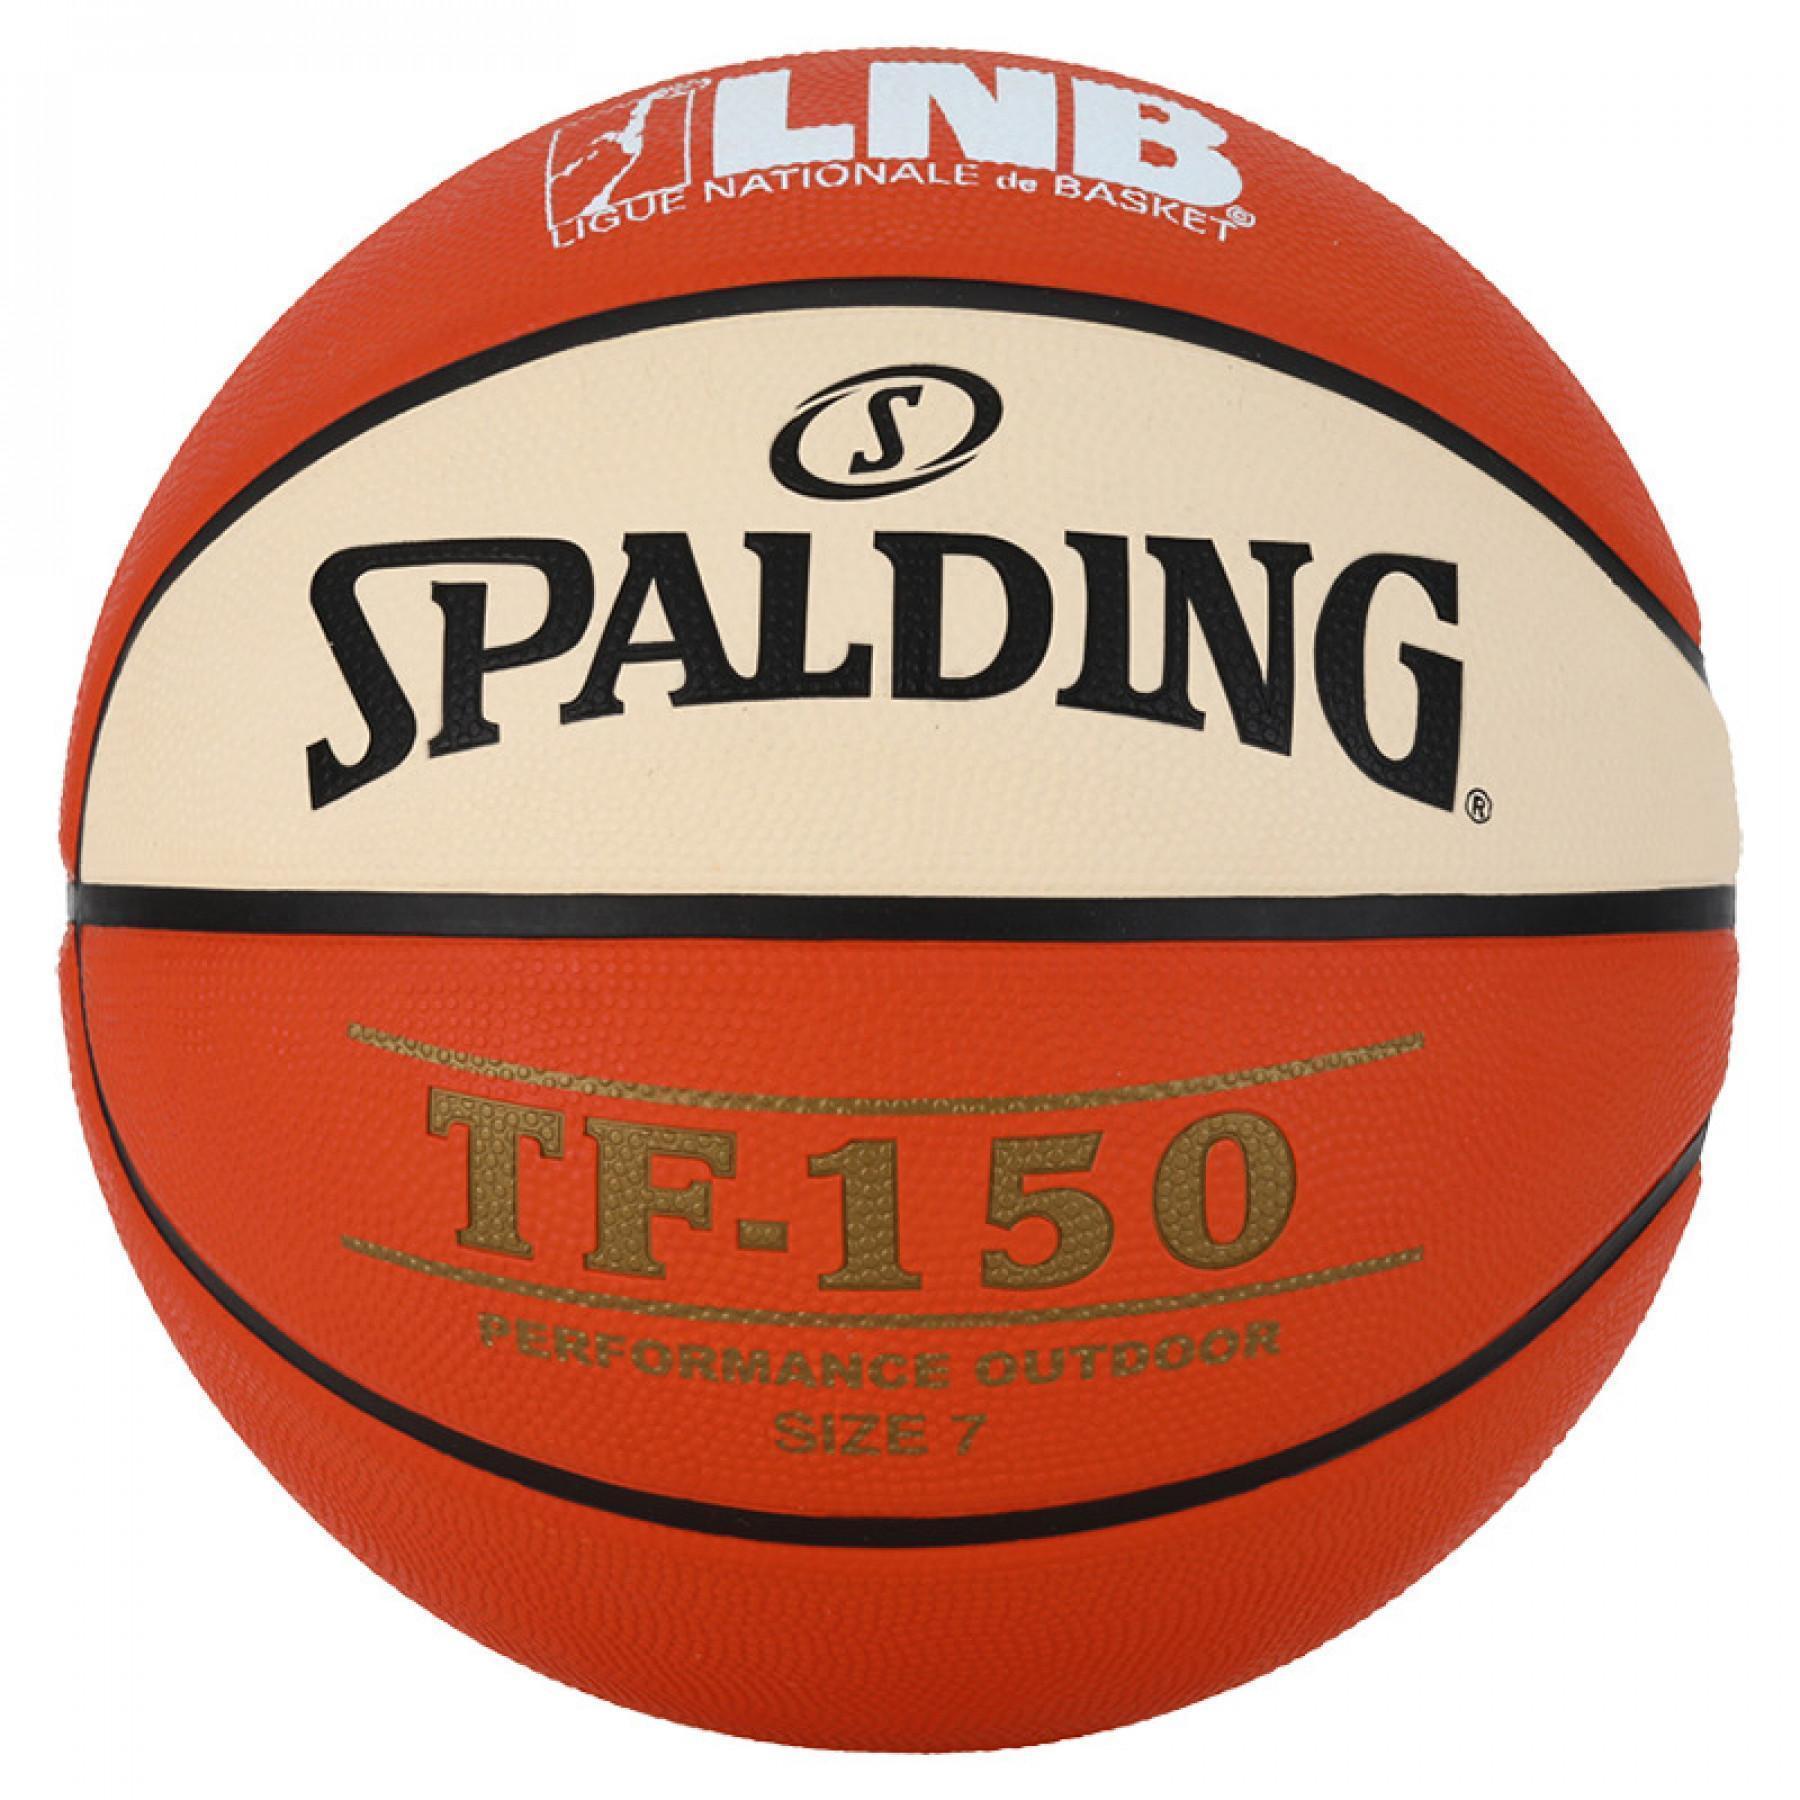 Ballong Spalding LNB Tf150 (83-957z)